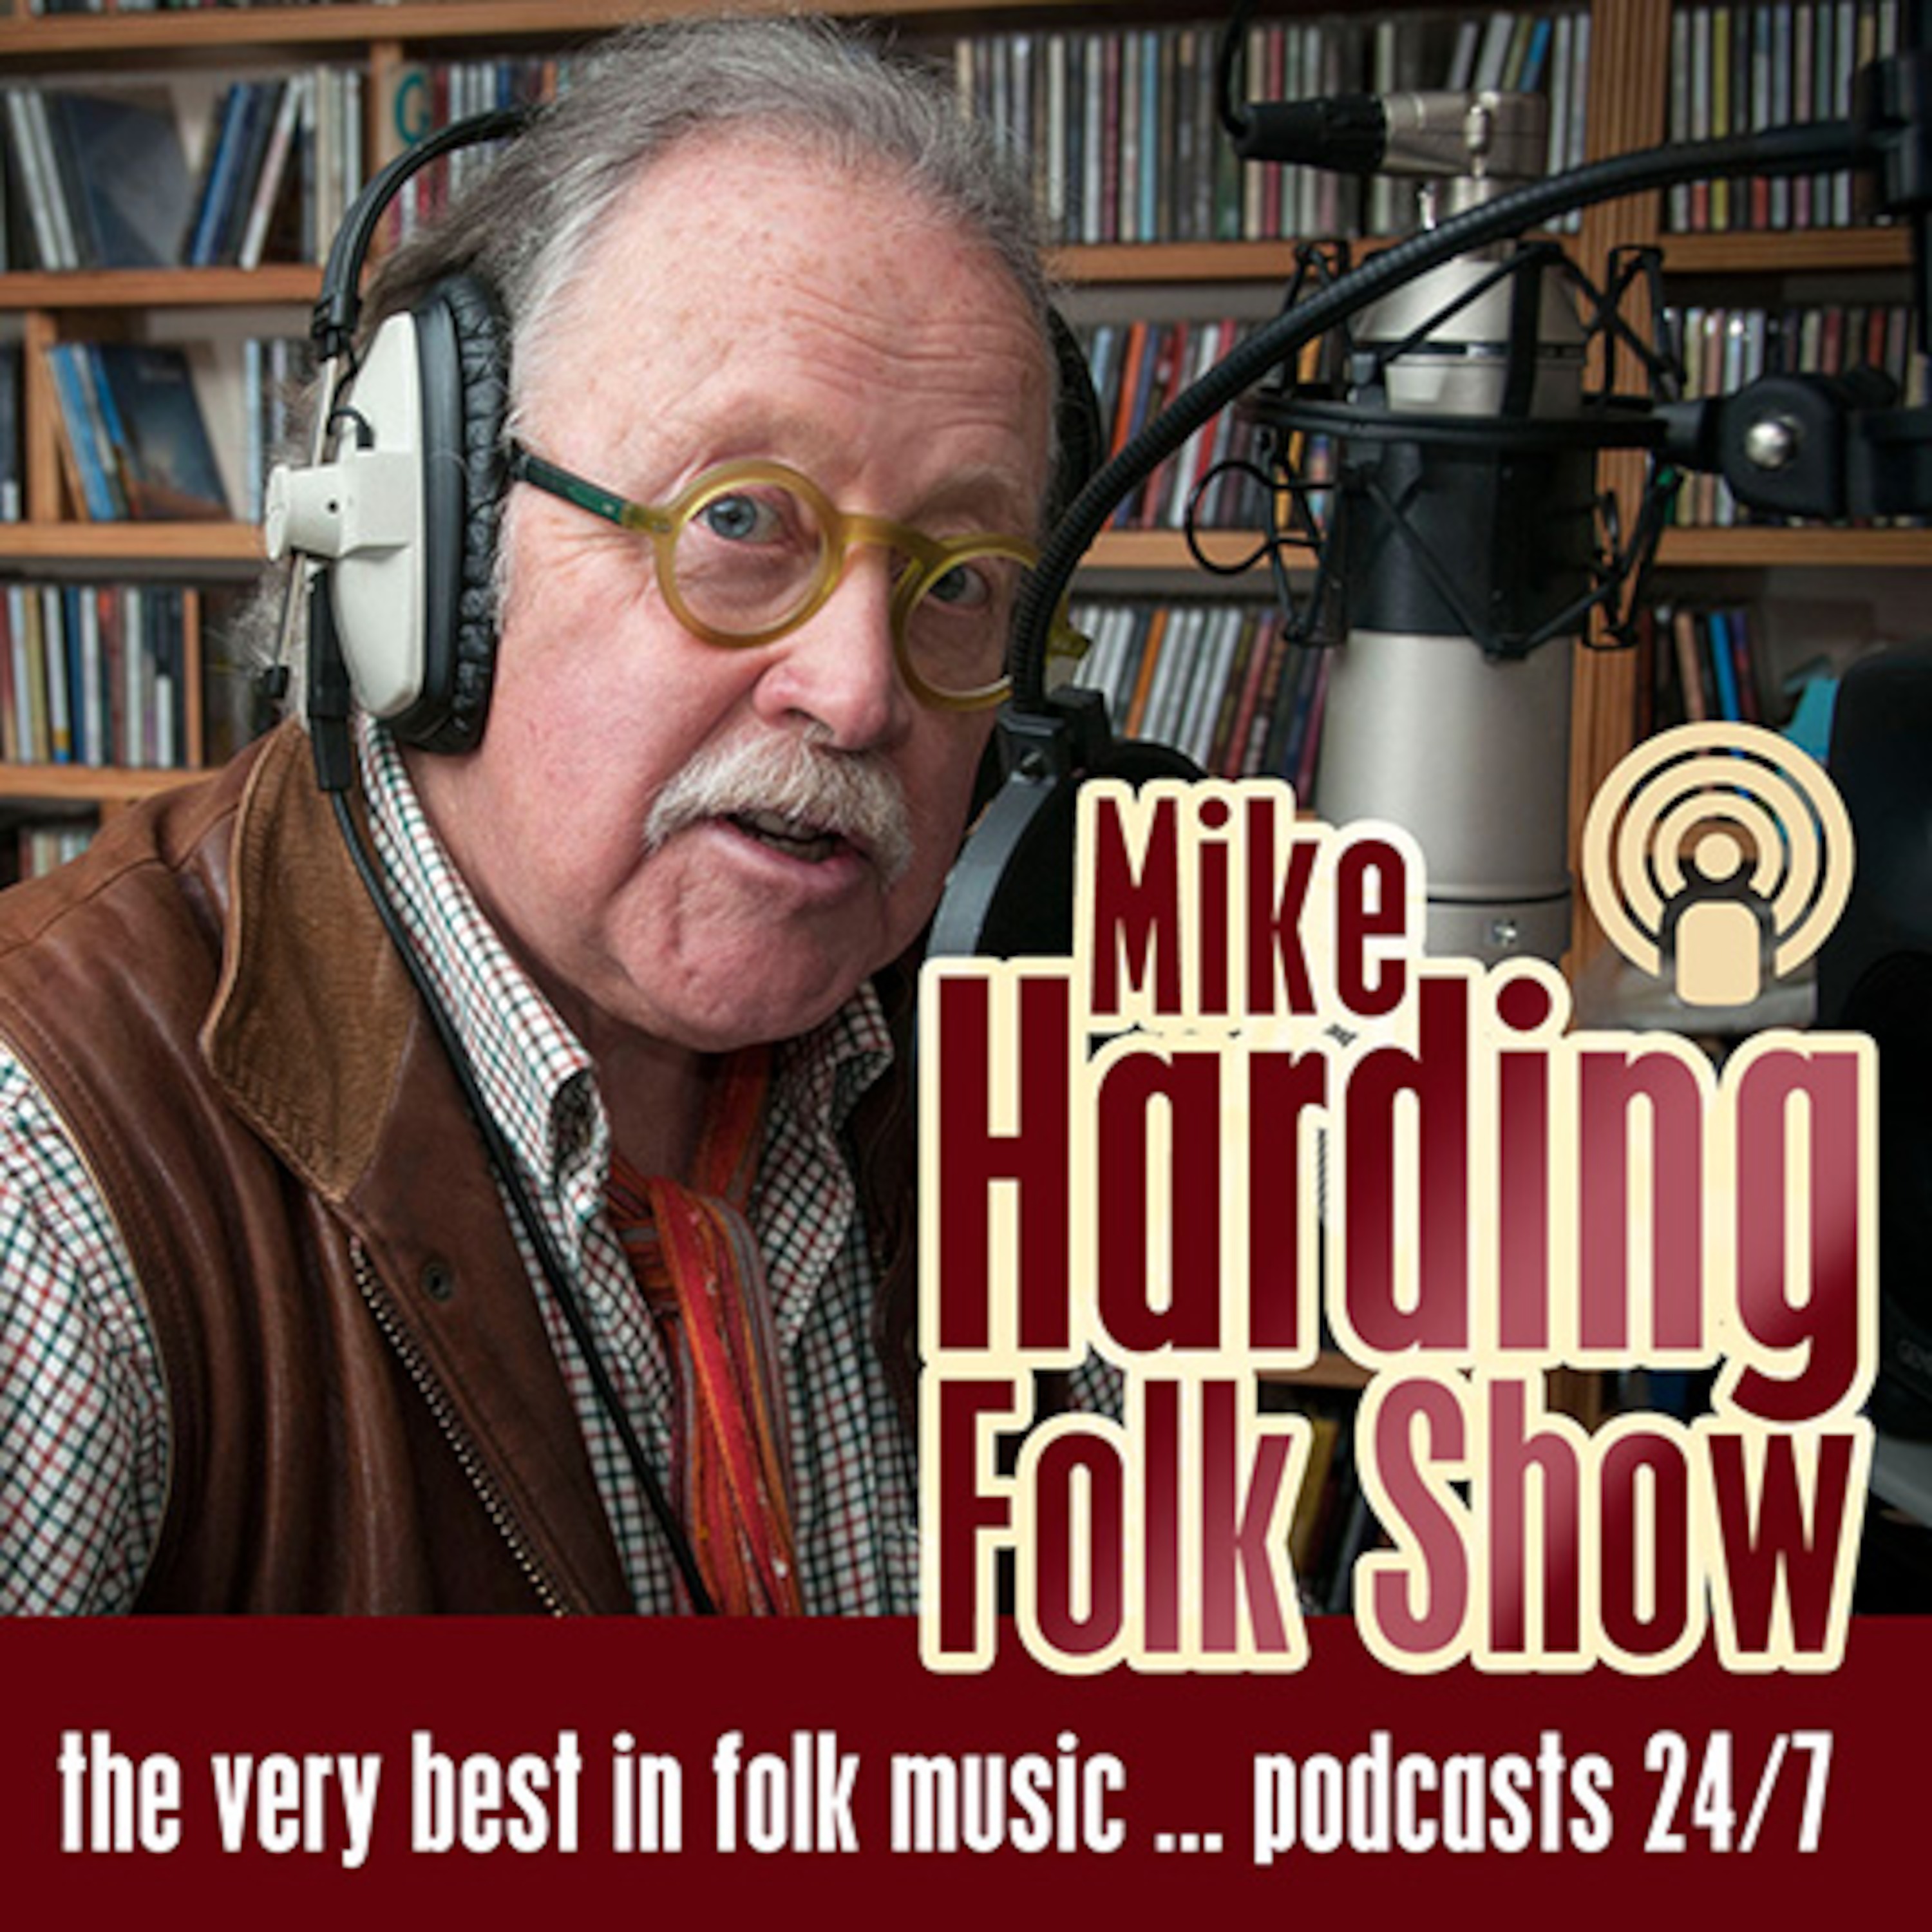 Mike Harding Folk Show 168